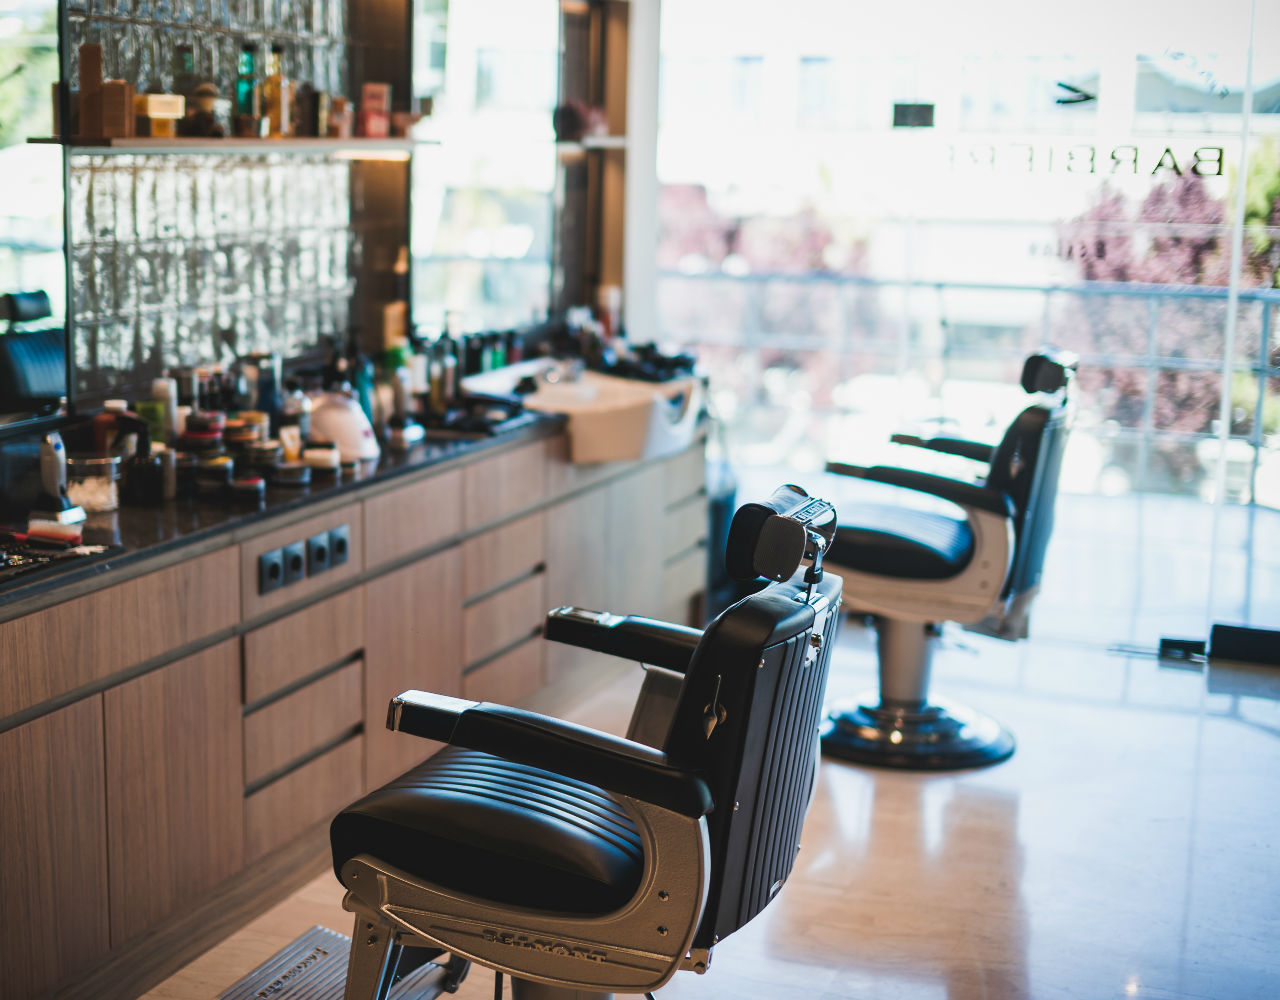 Barbiere, το νέο barber shop της Γλυφάδας δια χειρός Θοδωρή Γκιώνη